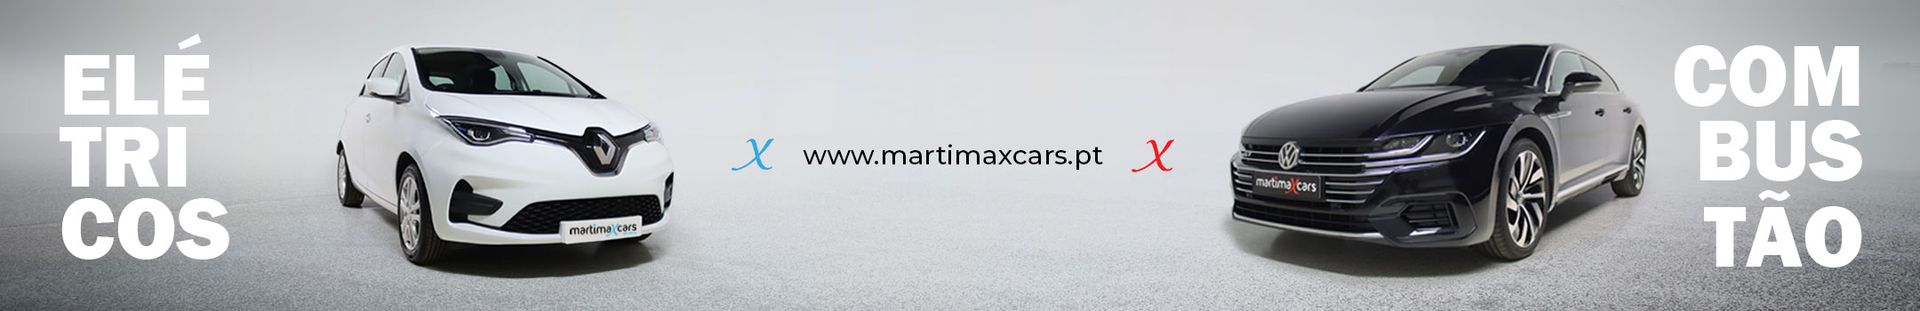 MARTIMAXCARS top banner